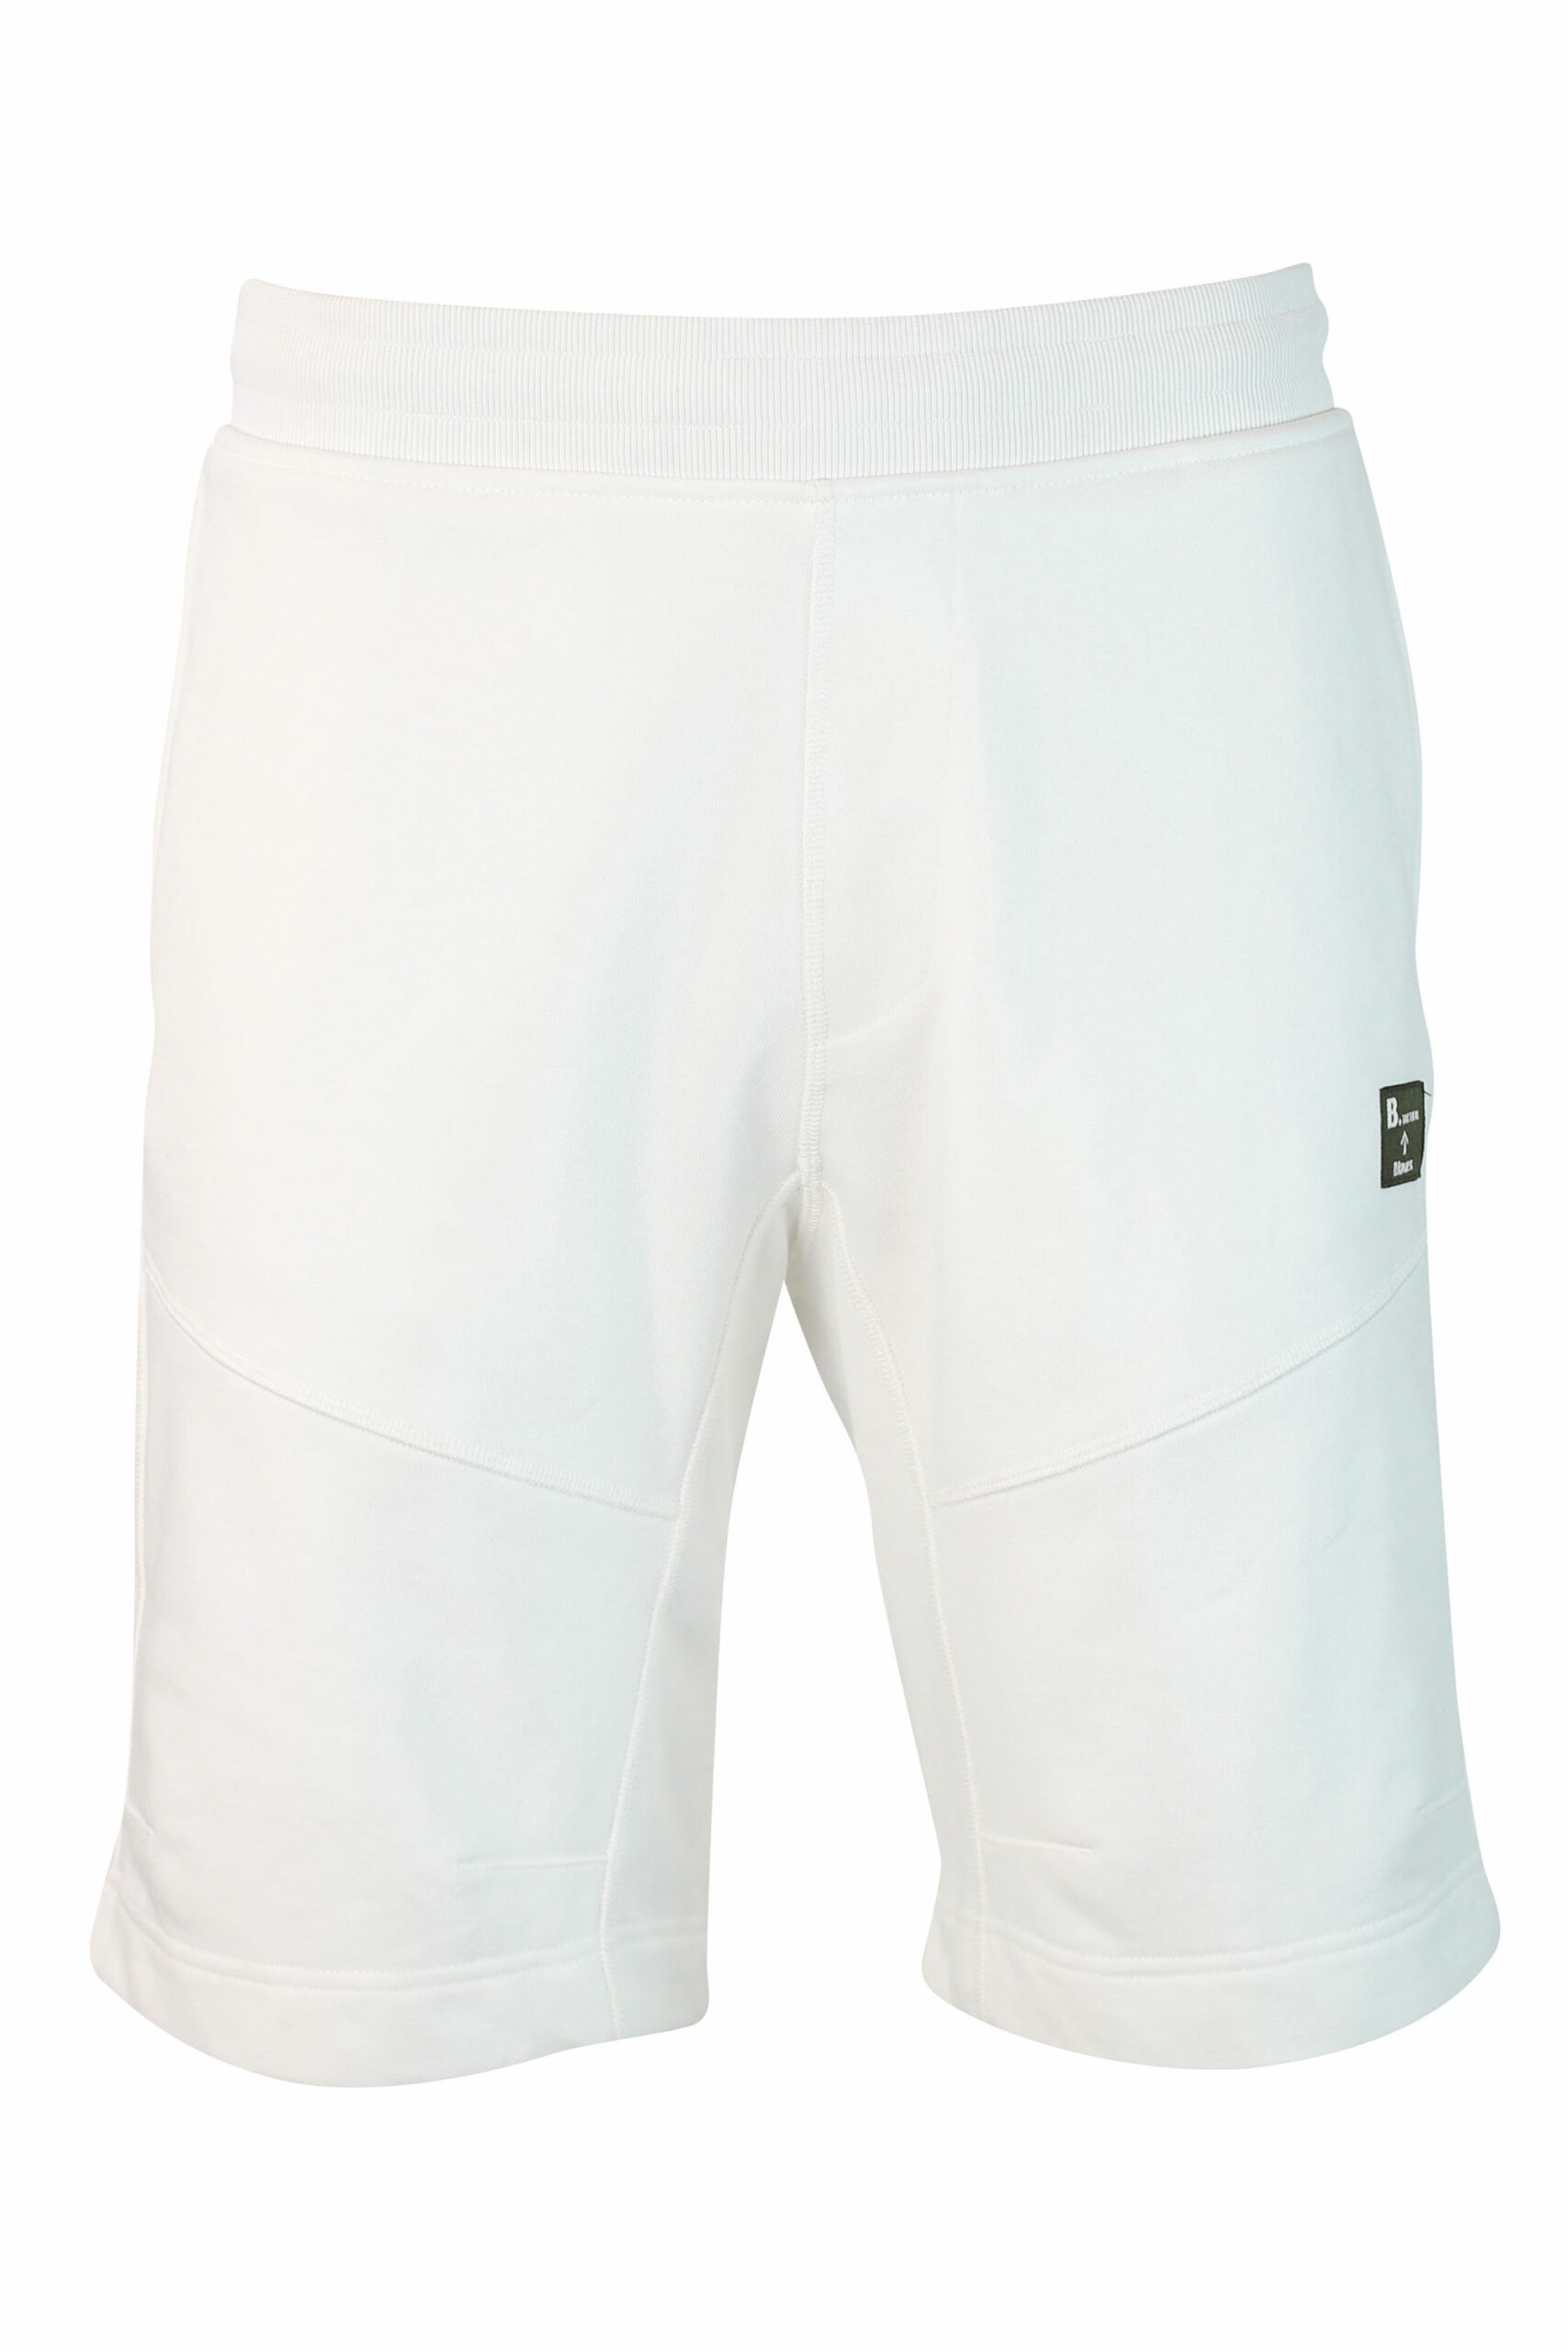 hielo raspador Stevenson Blauer - Pantalón de chándal corto blanco - BLS Fashion